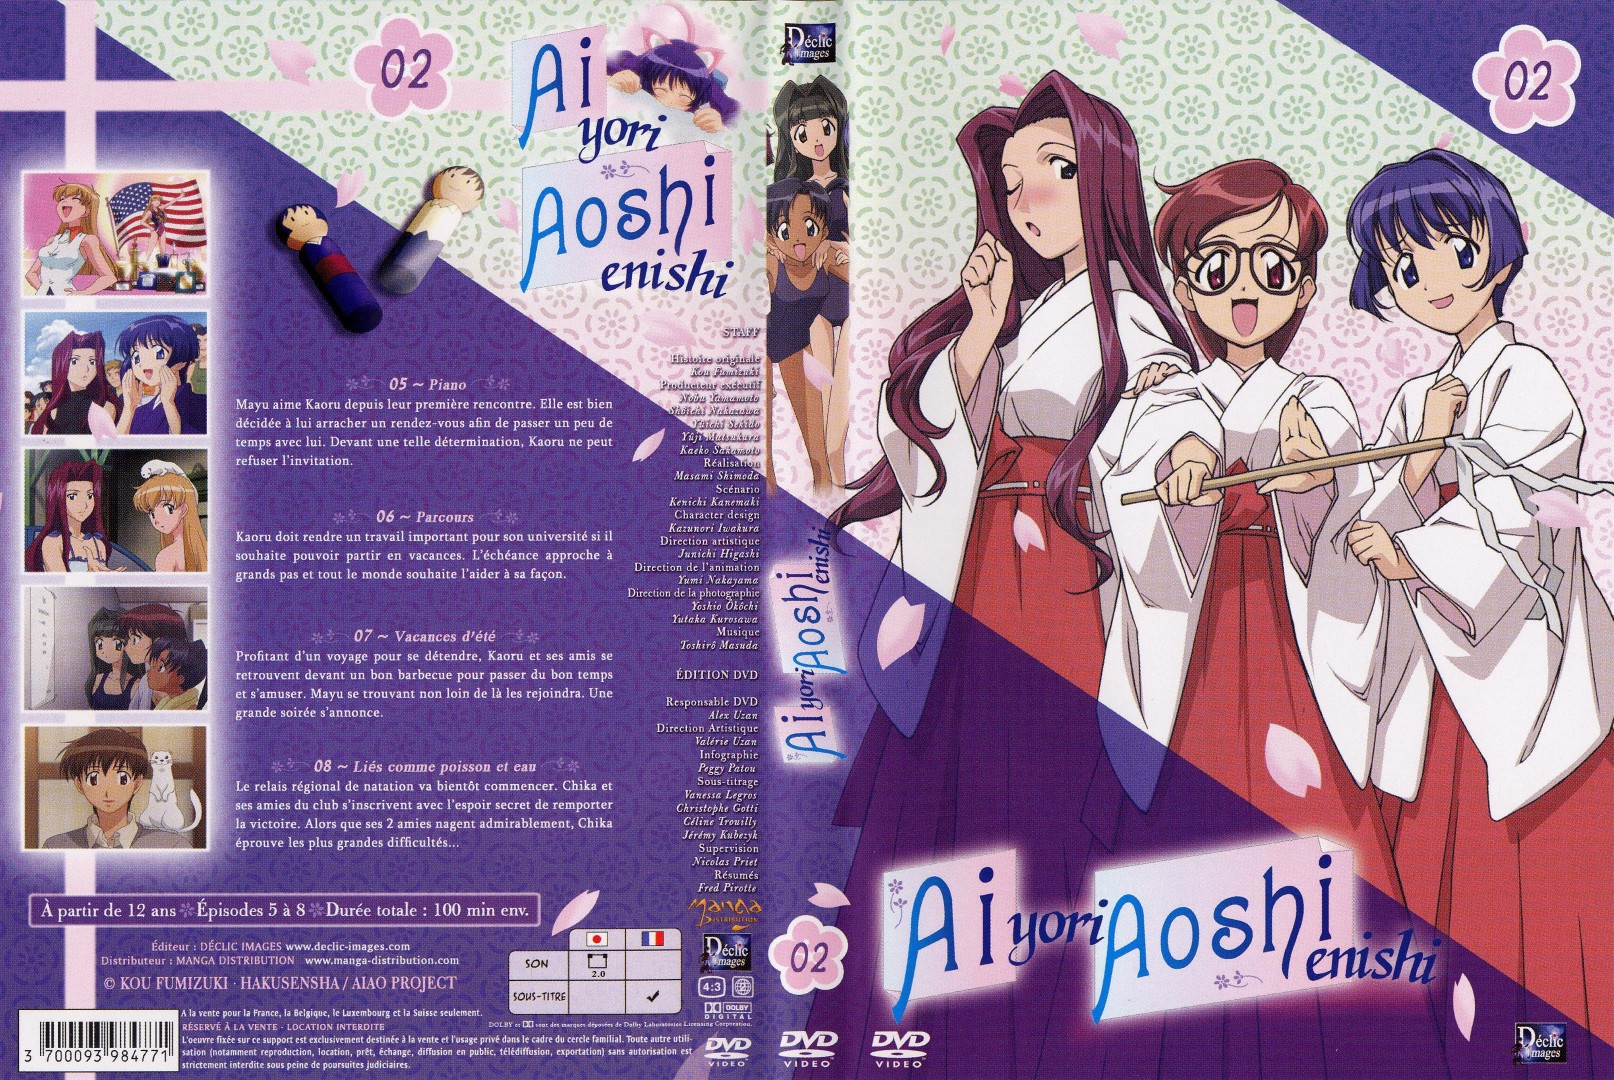 Jaquette DVD Aiyori Aoshienishi vol 2